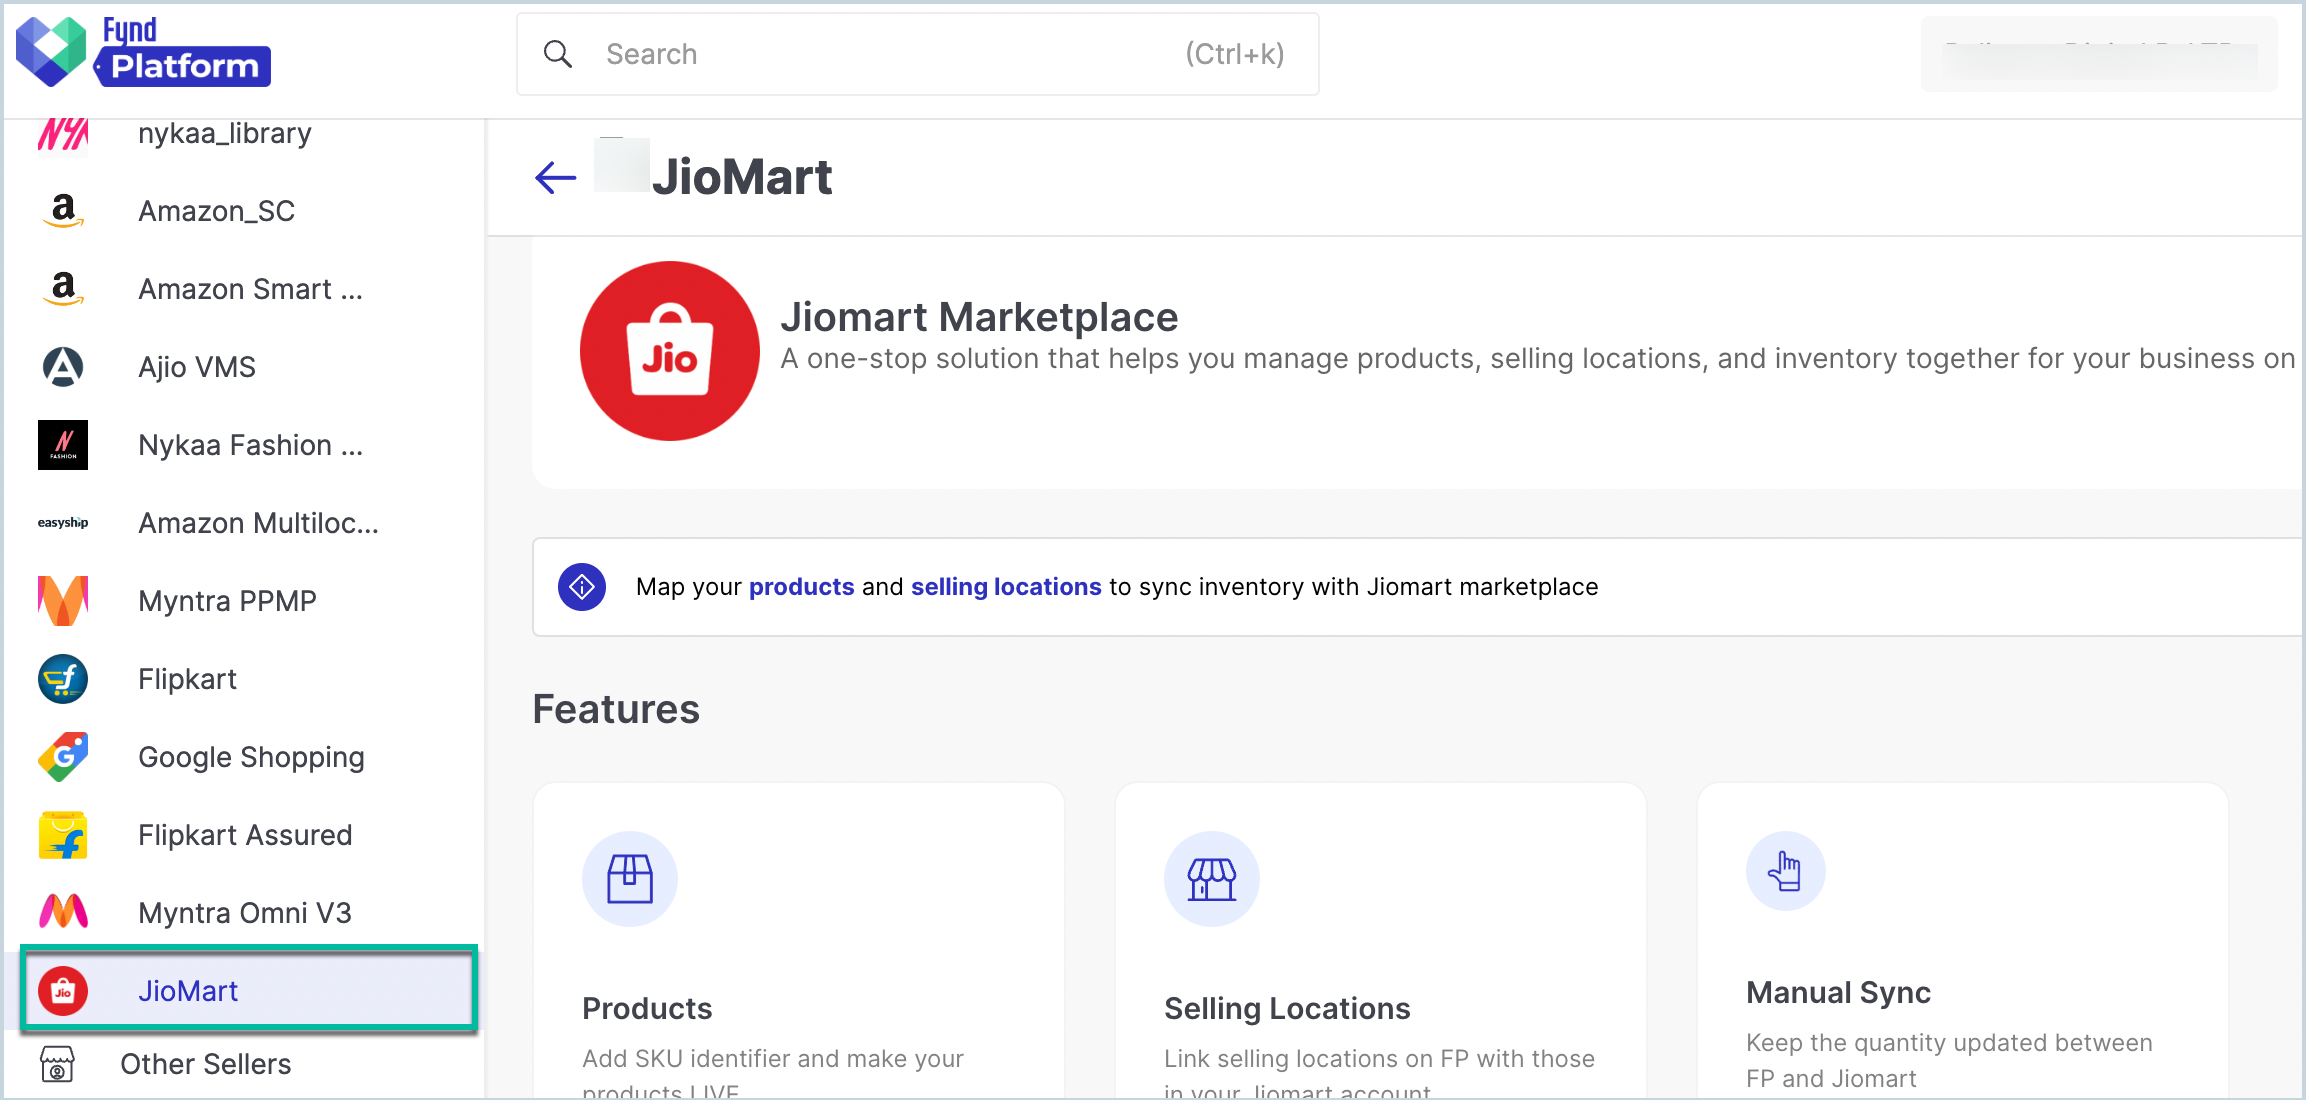 Search Results – JioMart